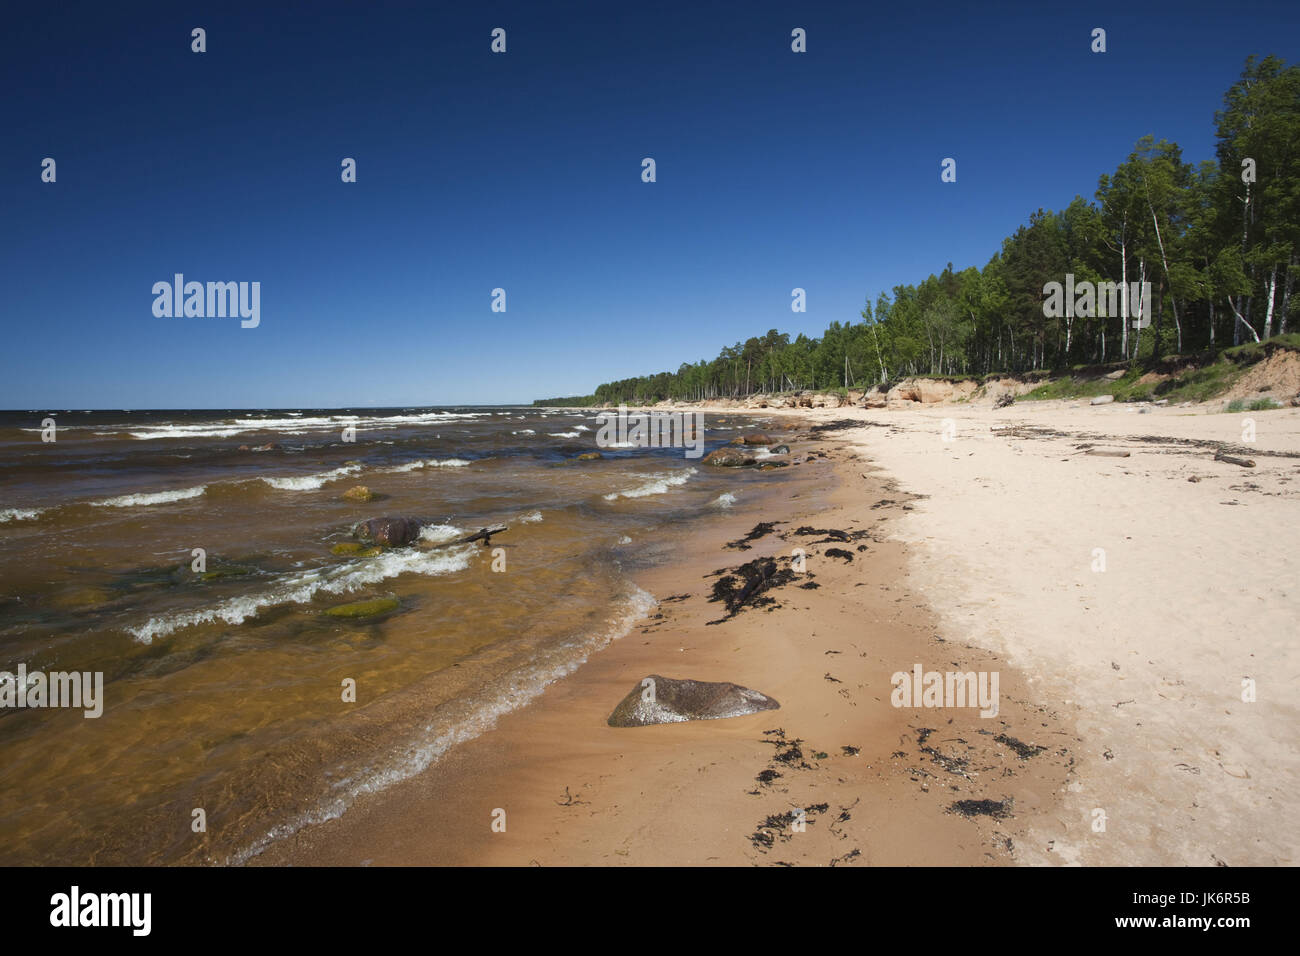 Latvia, Northeastern Latvia, Vidzeme Coast Region, Saulkrasti, beach by the Veczemju Red Cliffs Stock Photo